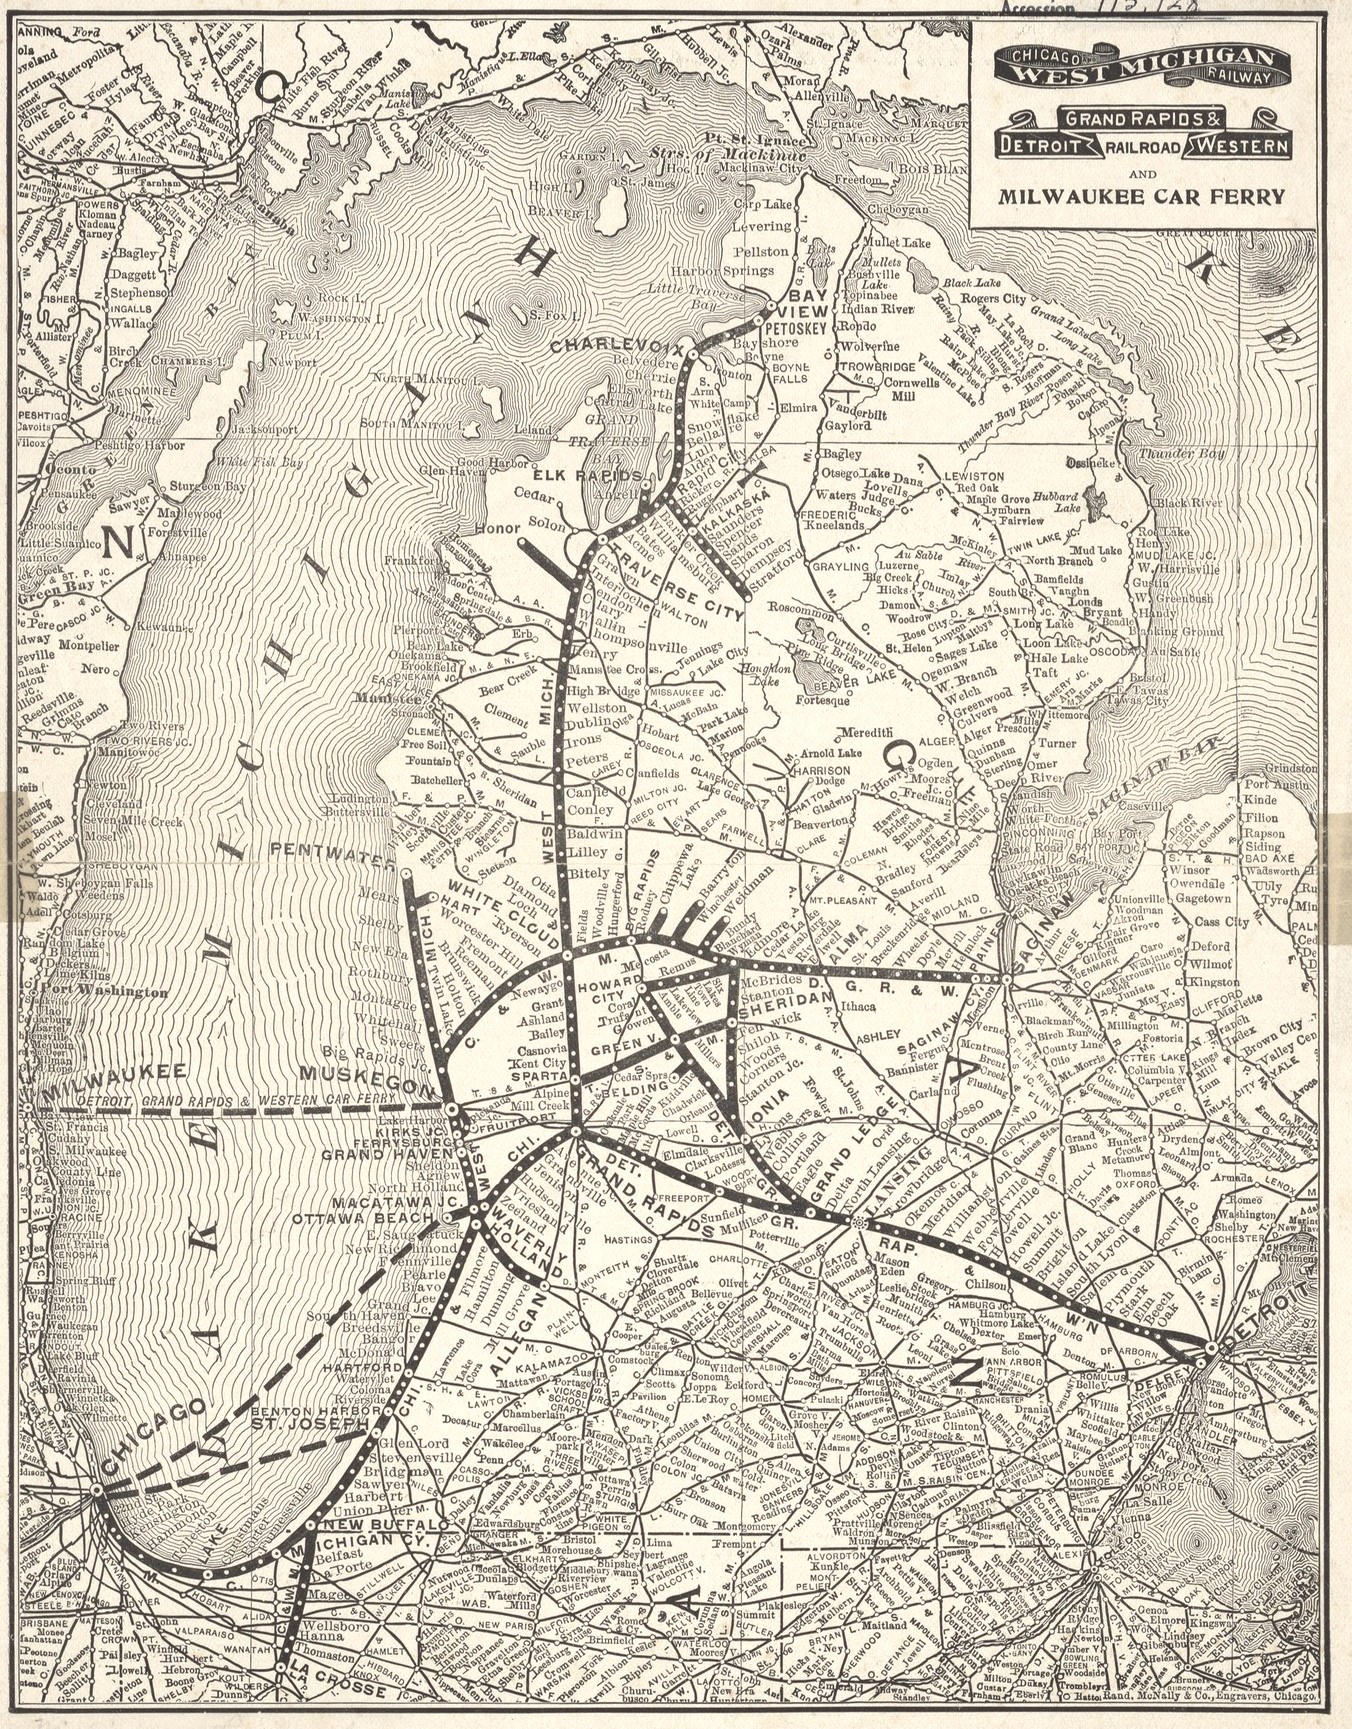 DGR&W - C&WM Railroad Map